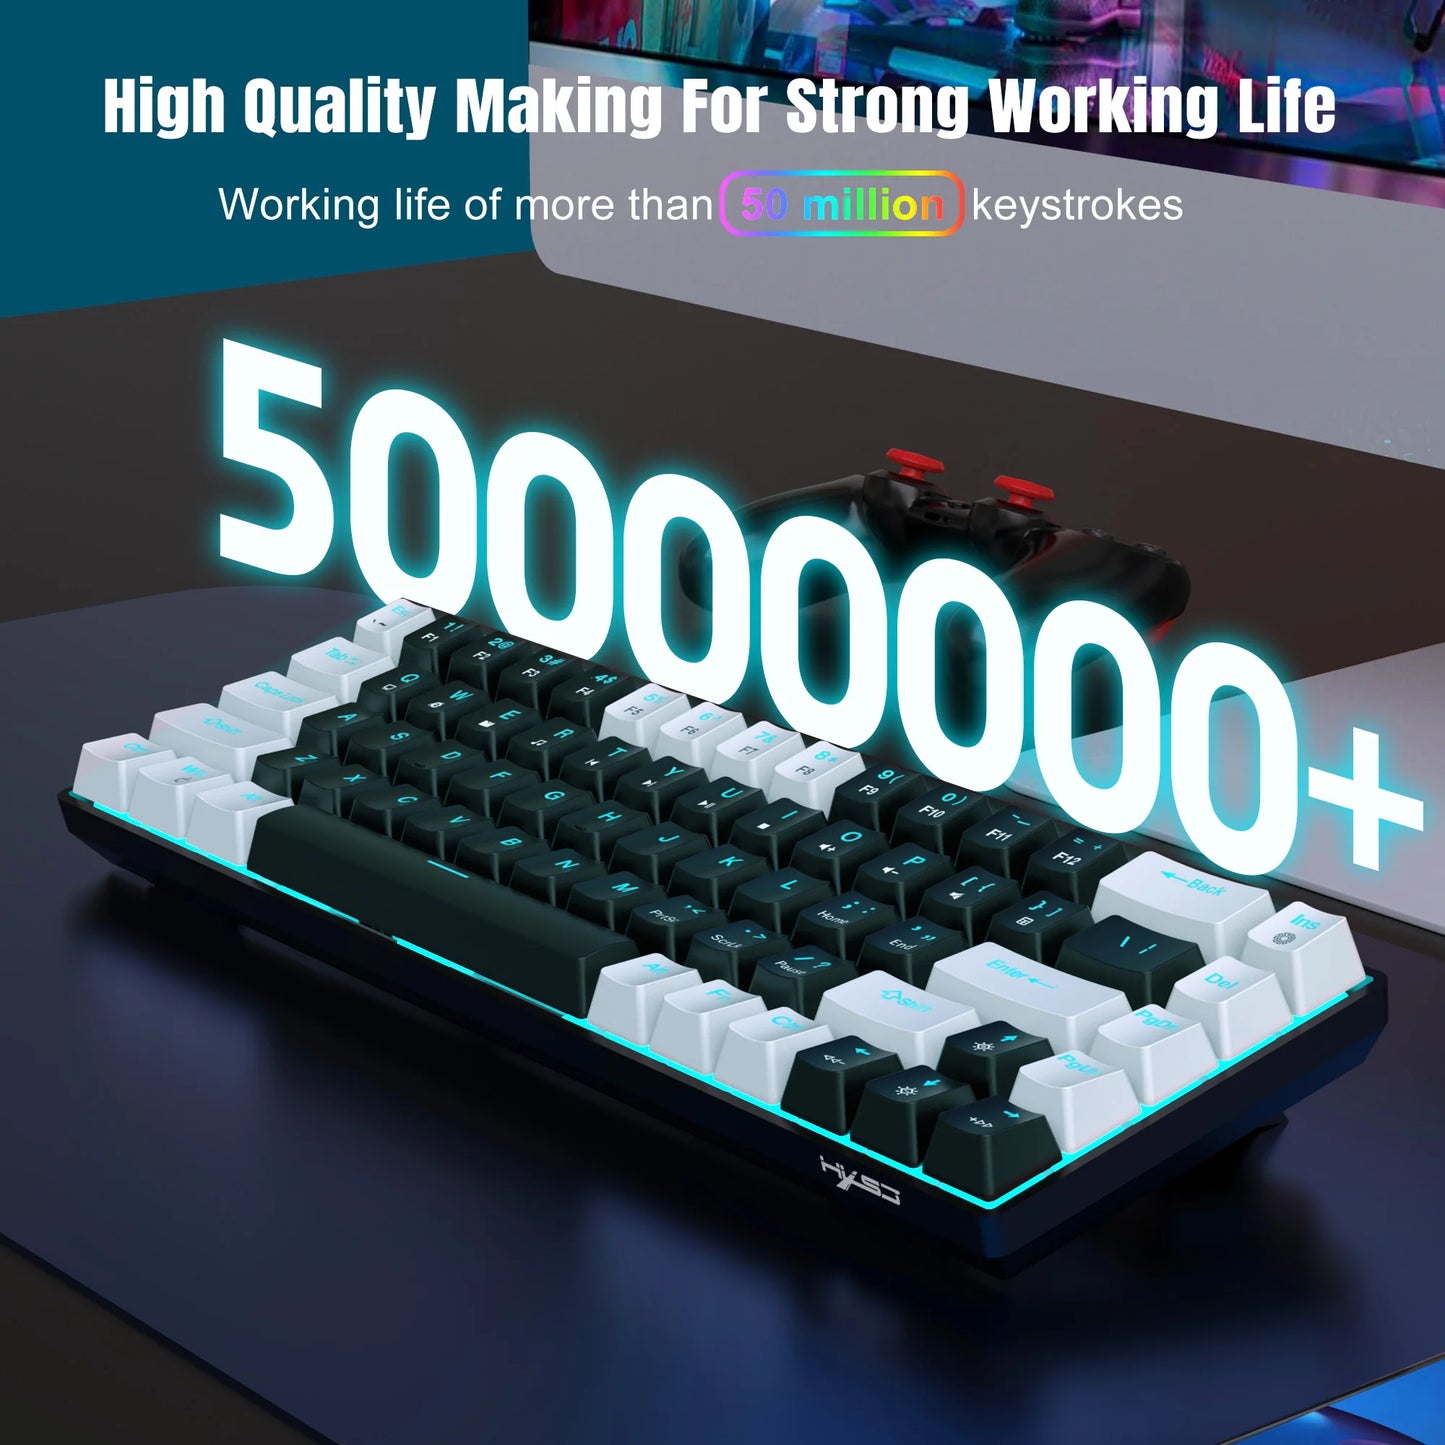 Ergonomic 68-Key Mechanical Gaming Keyboard with RGB Backlight